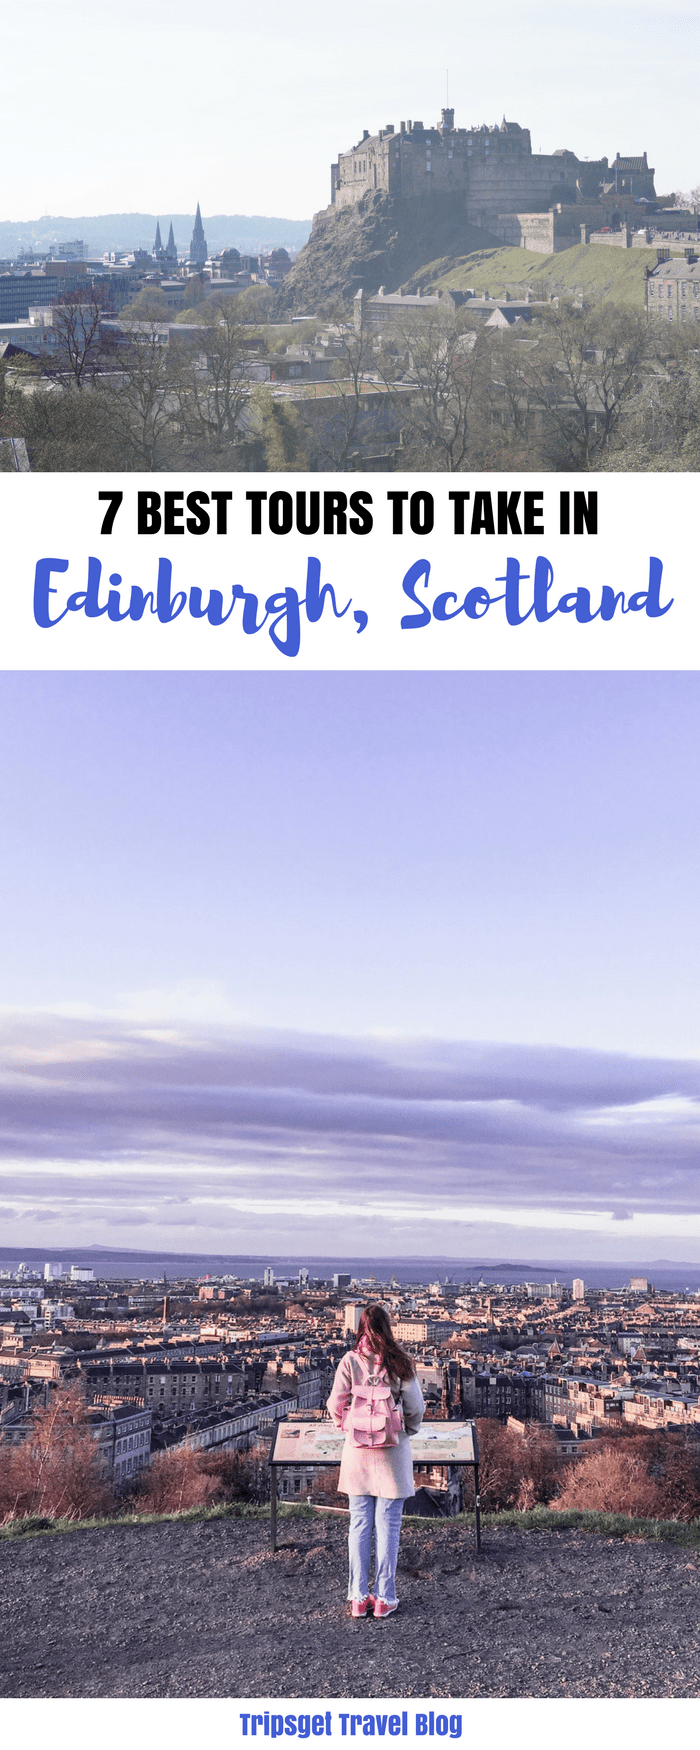 best Edinburgh tours - best tours in Edinburgh, Scotland